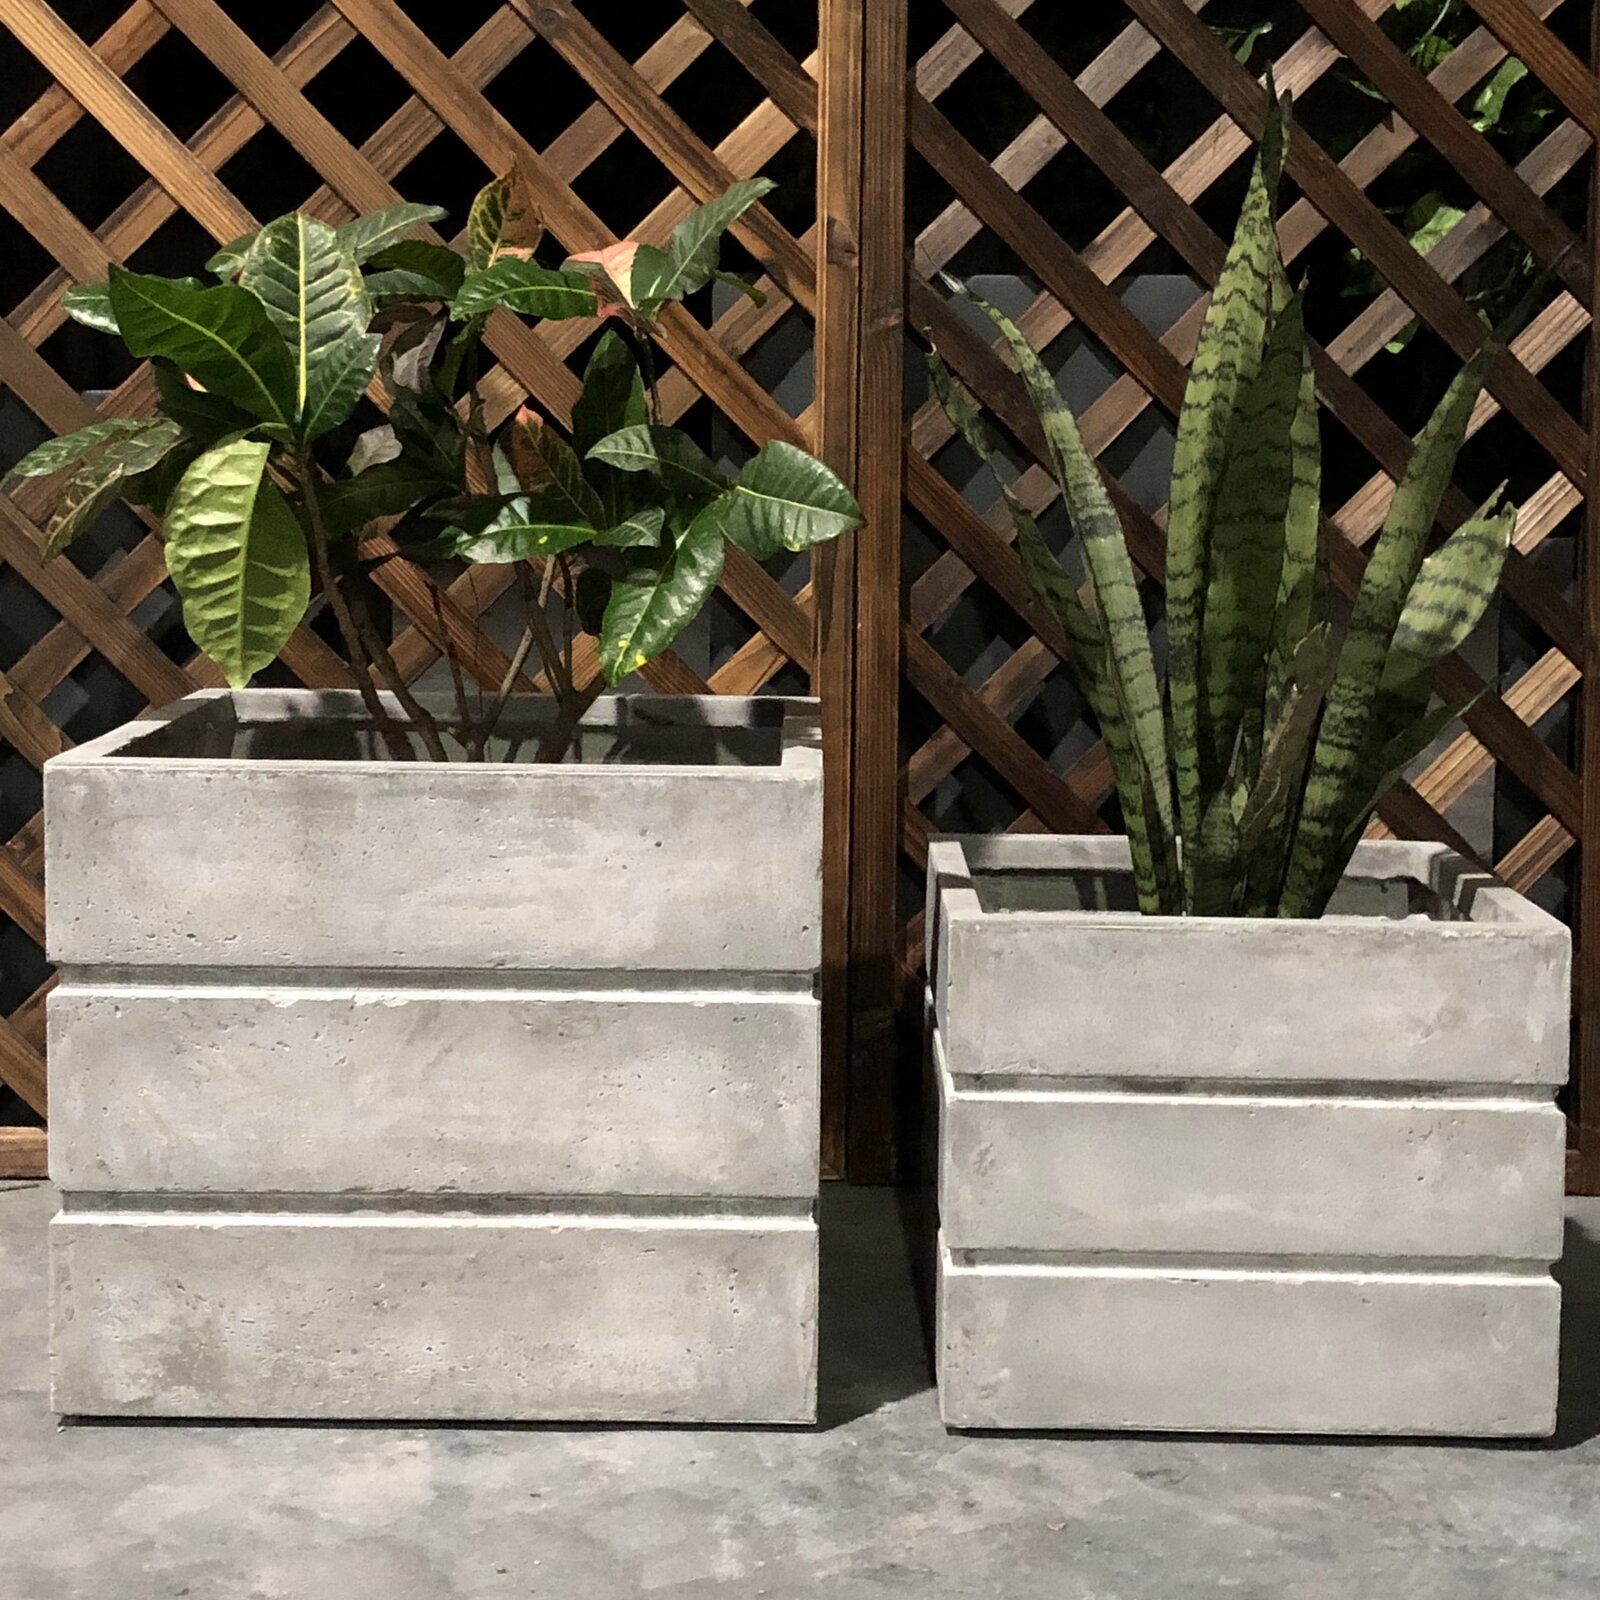 Williston Forge Gant Crate Square 2-Piece Concrete Planter Box Set